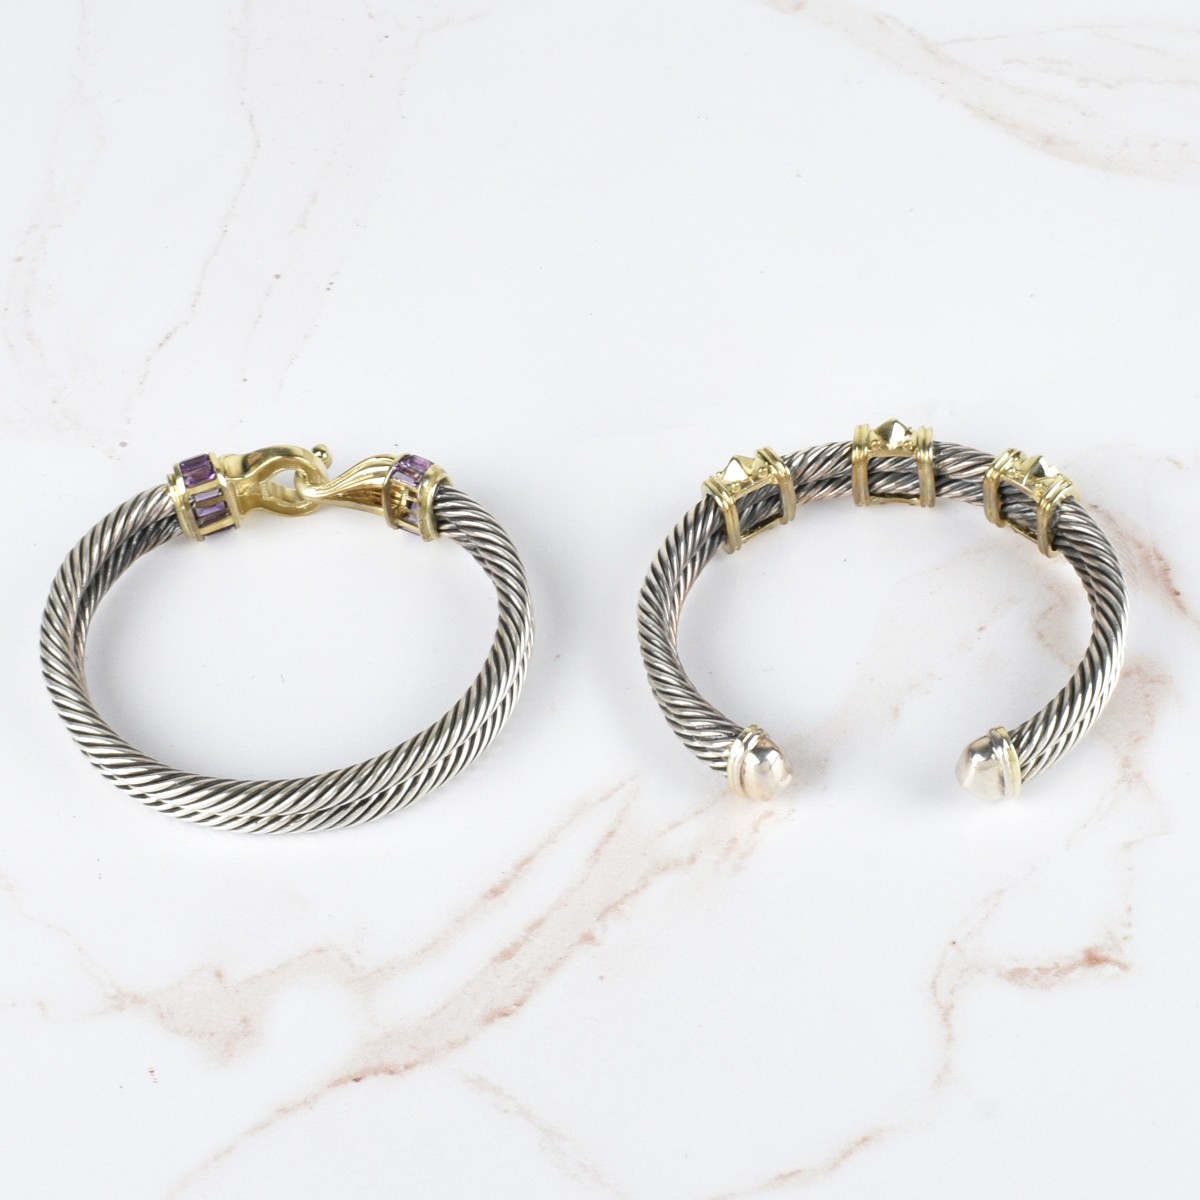 Gemstone, 14K and Silver Bangle Bracelets